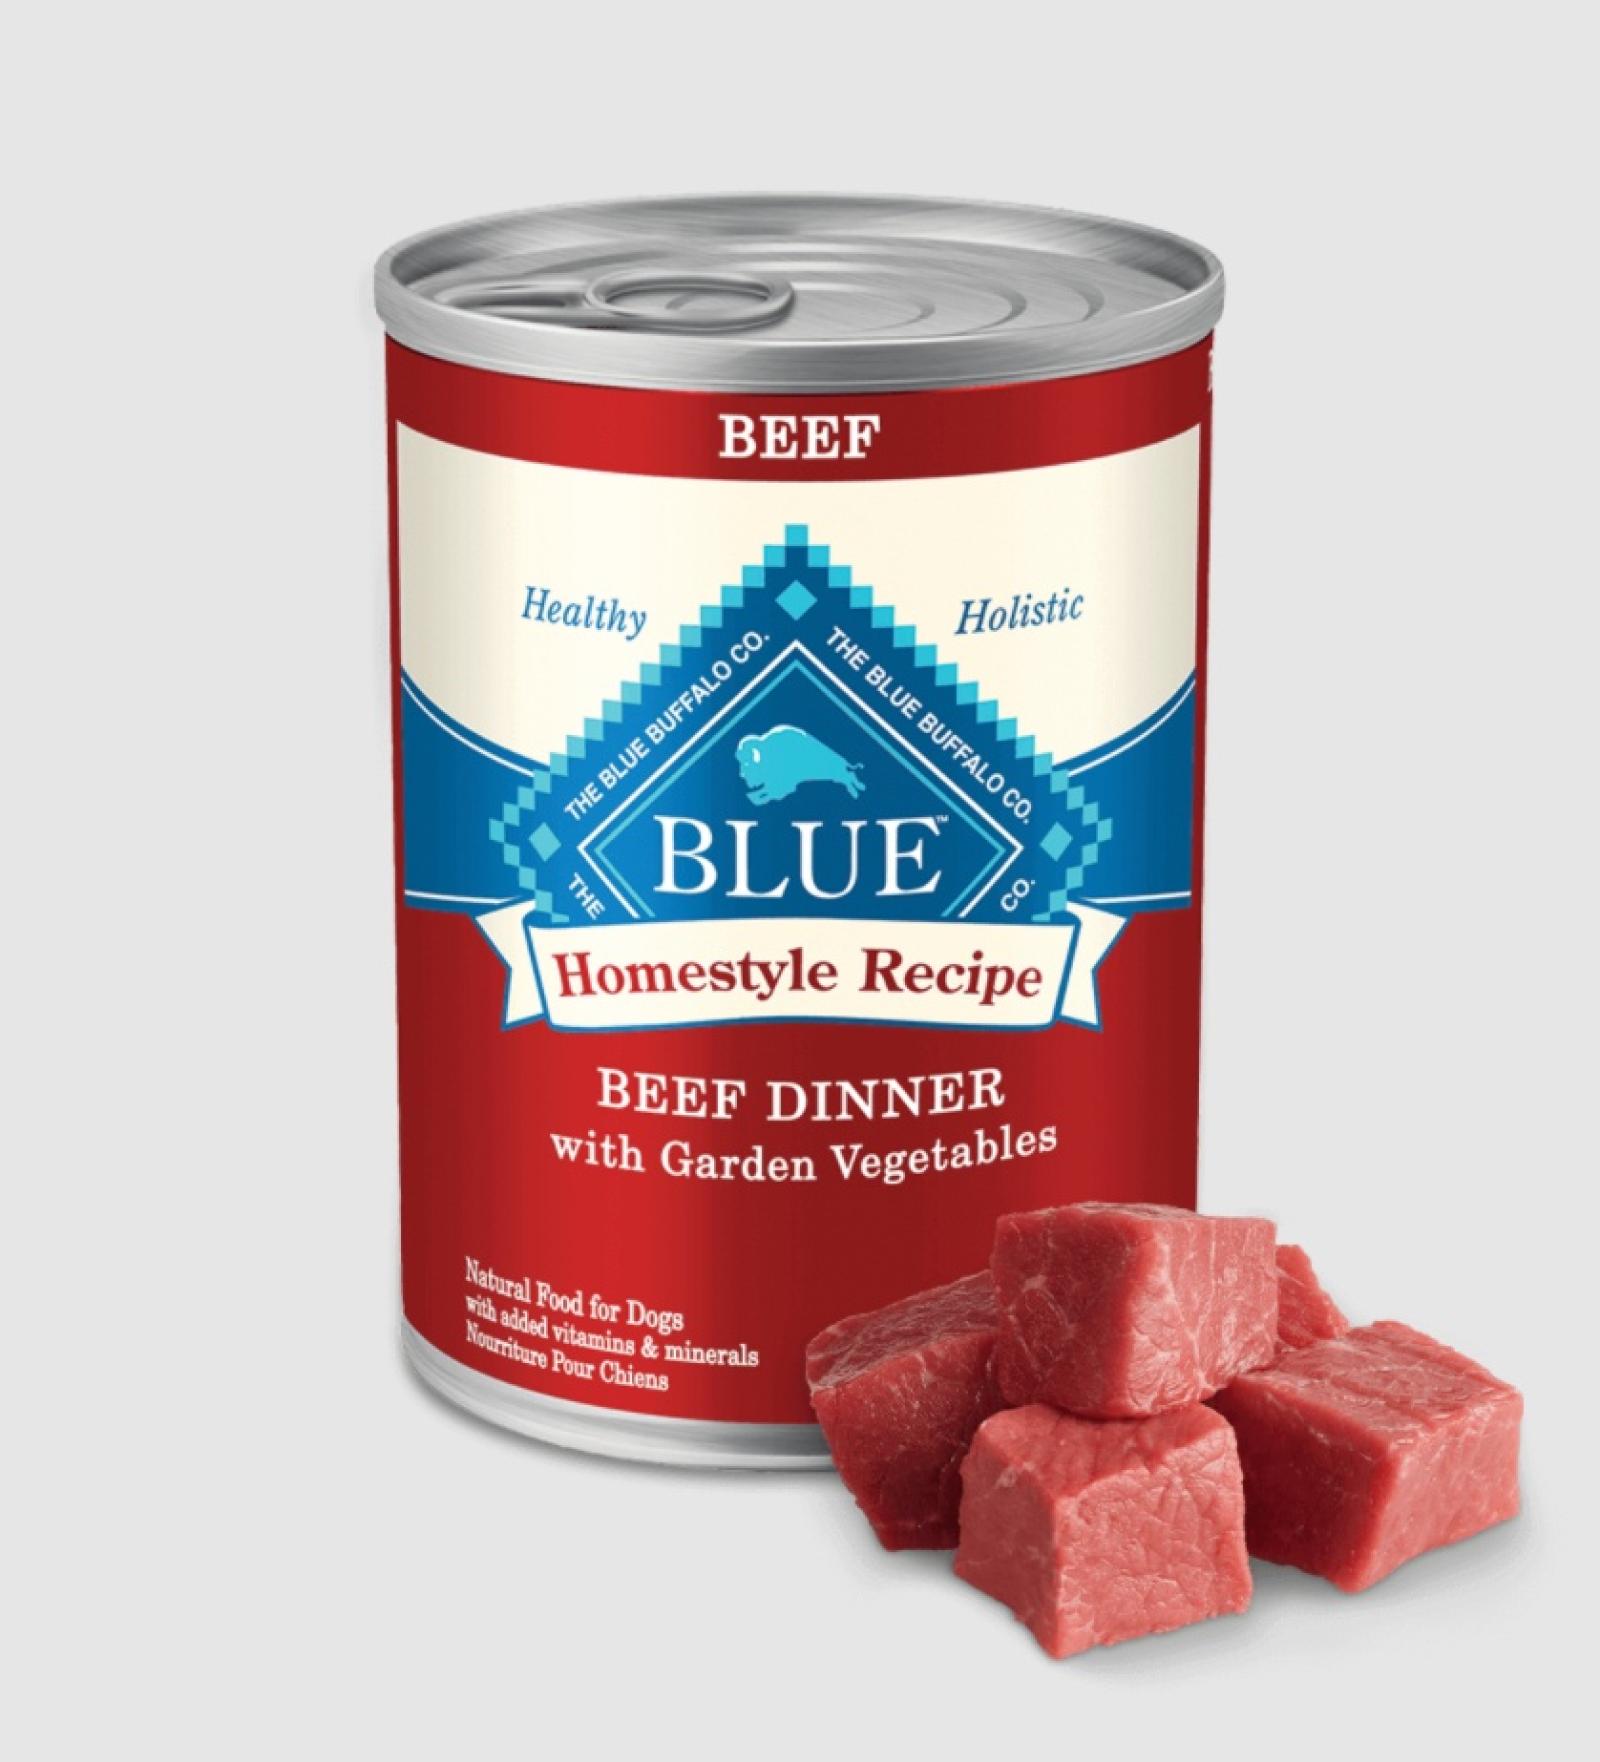 Blue Buffalo Homestyle Recipe Beef Dinner